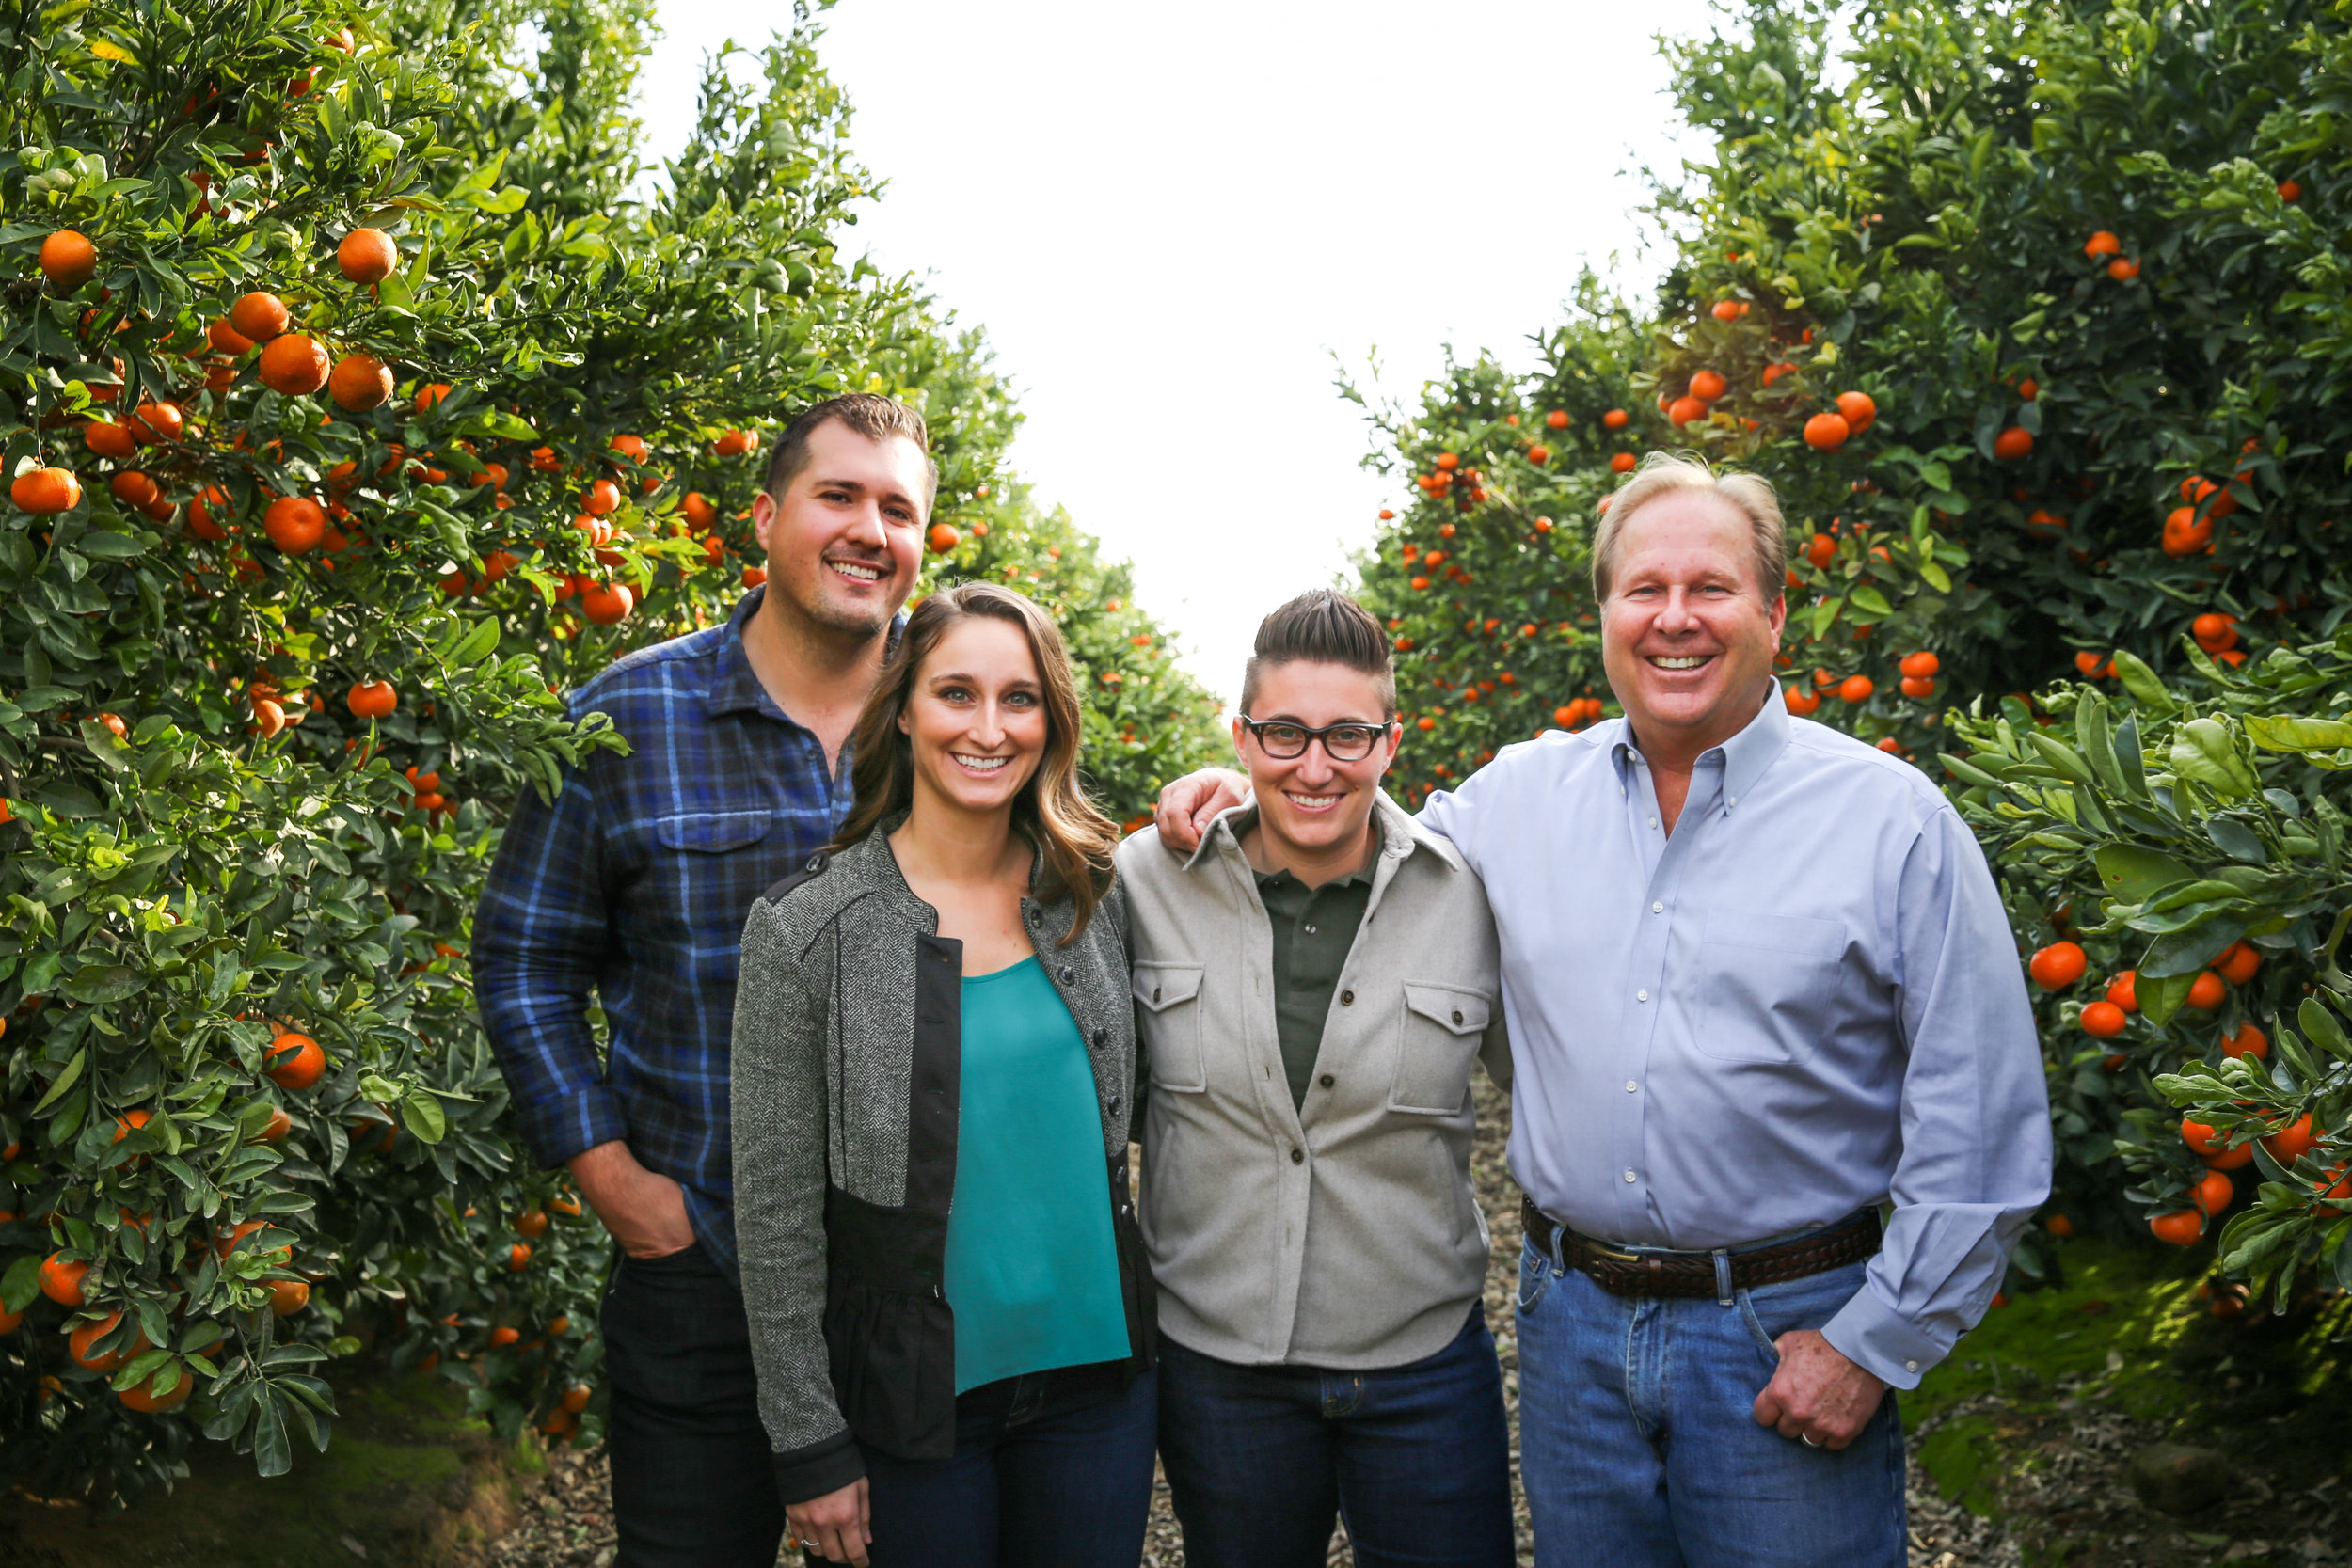 The family and team behind Fruit World (left to right): CJ Buxman, Angelica Kaprielian, Bianca Kaprielian, Craig Kaprielian